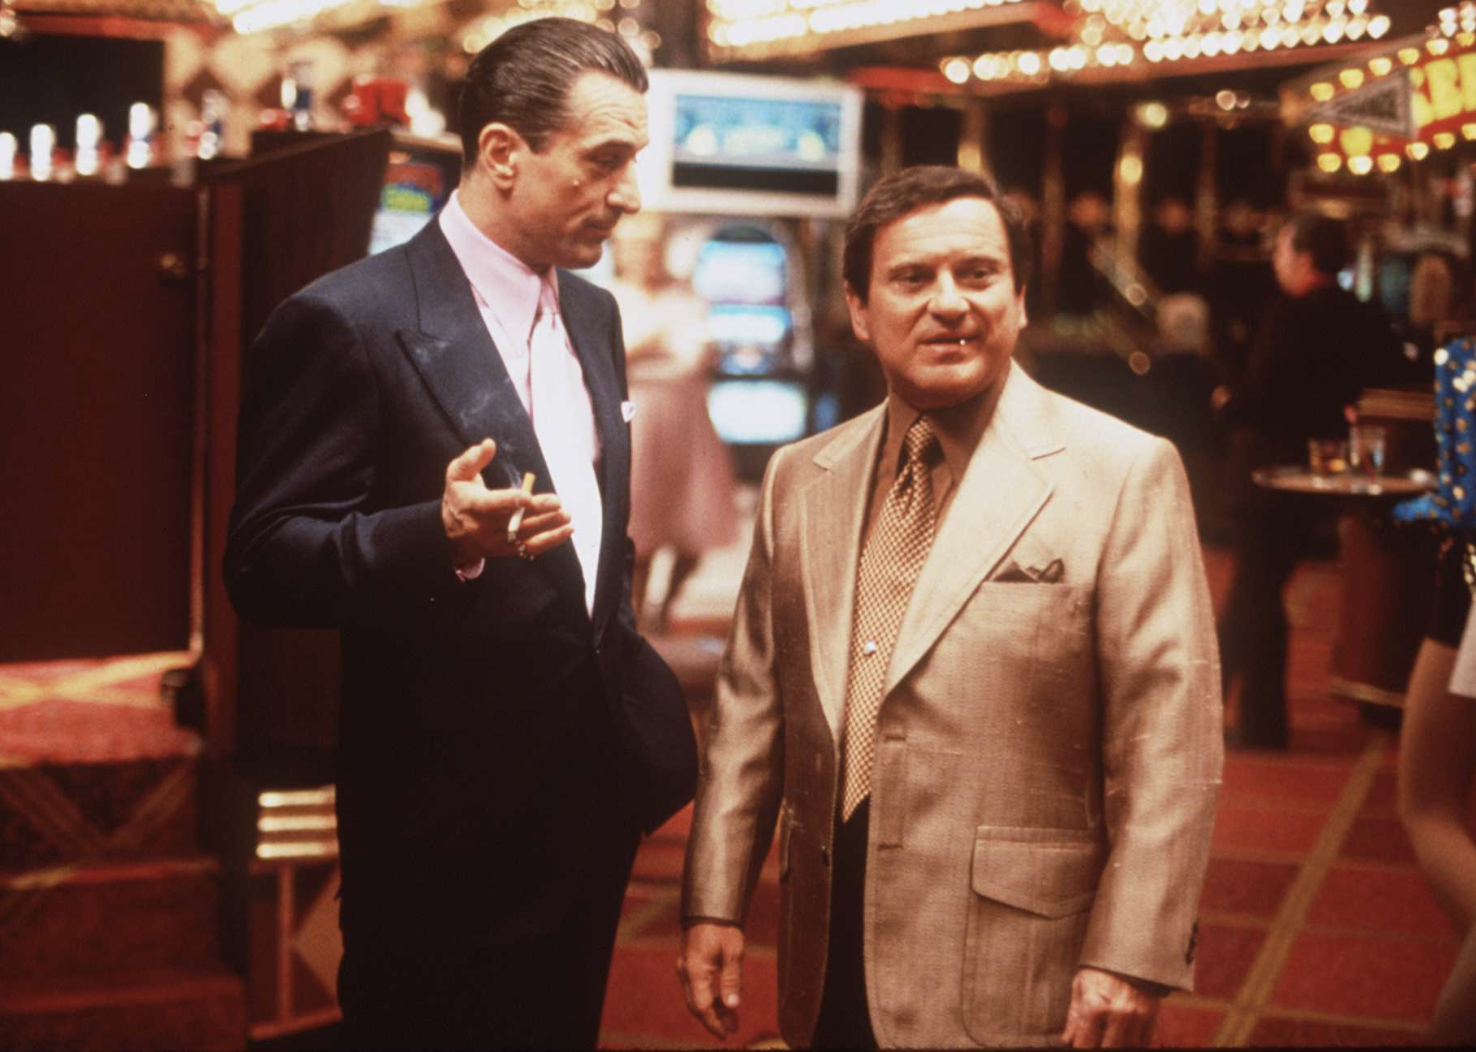 Robert De Niro and Joe Pesci in "Casino"